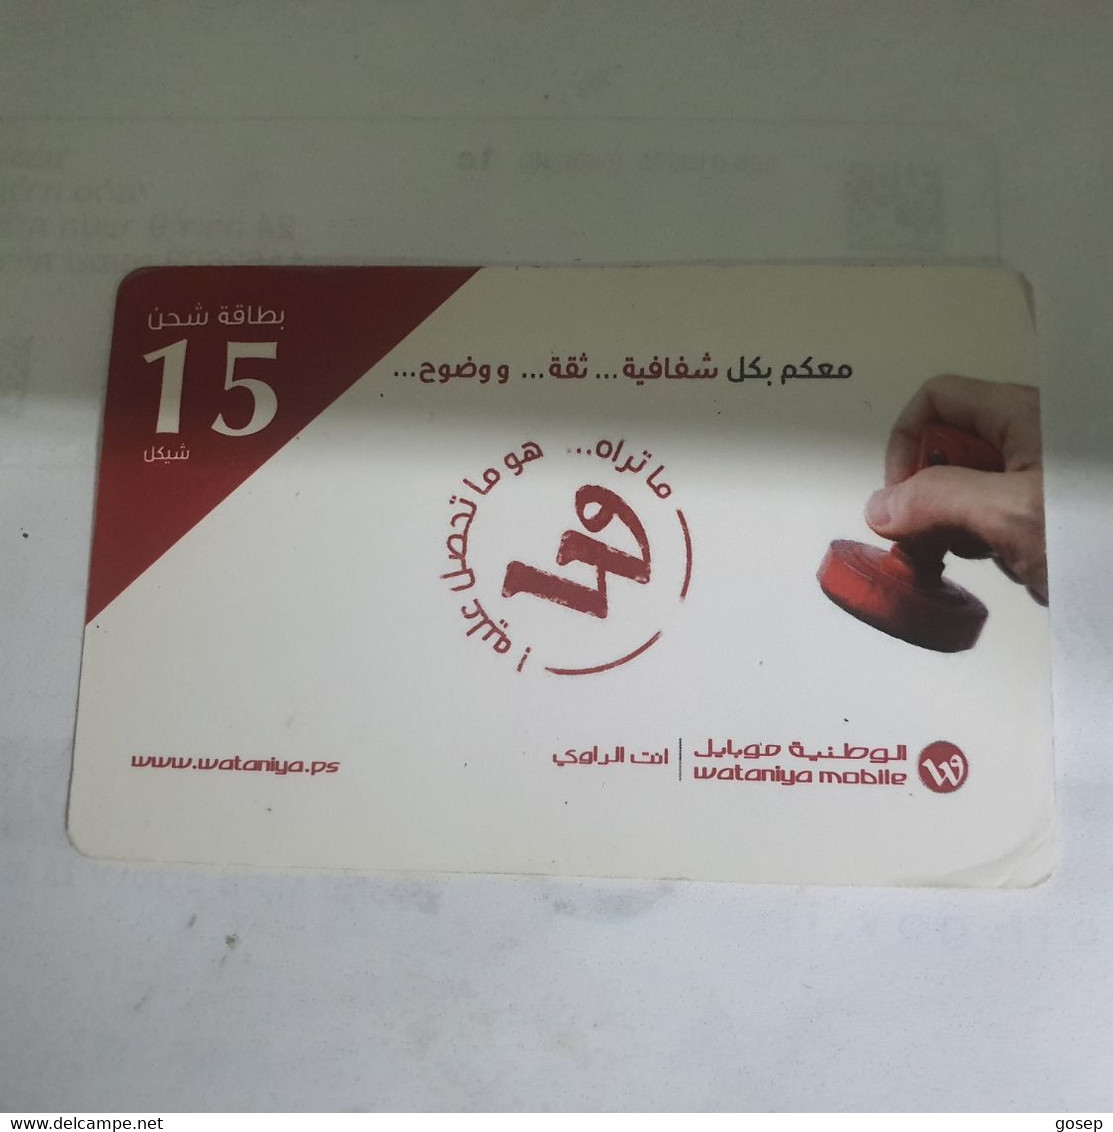 PALESTINE-(PS-WAT-REF-0005C)-Mobile 15-(380)-(9811-2831-5205-3725)-(1/5/2016)used Card+1prepiad Free - Palestina